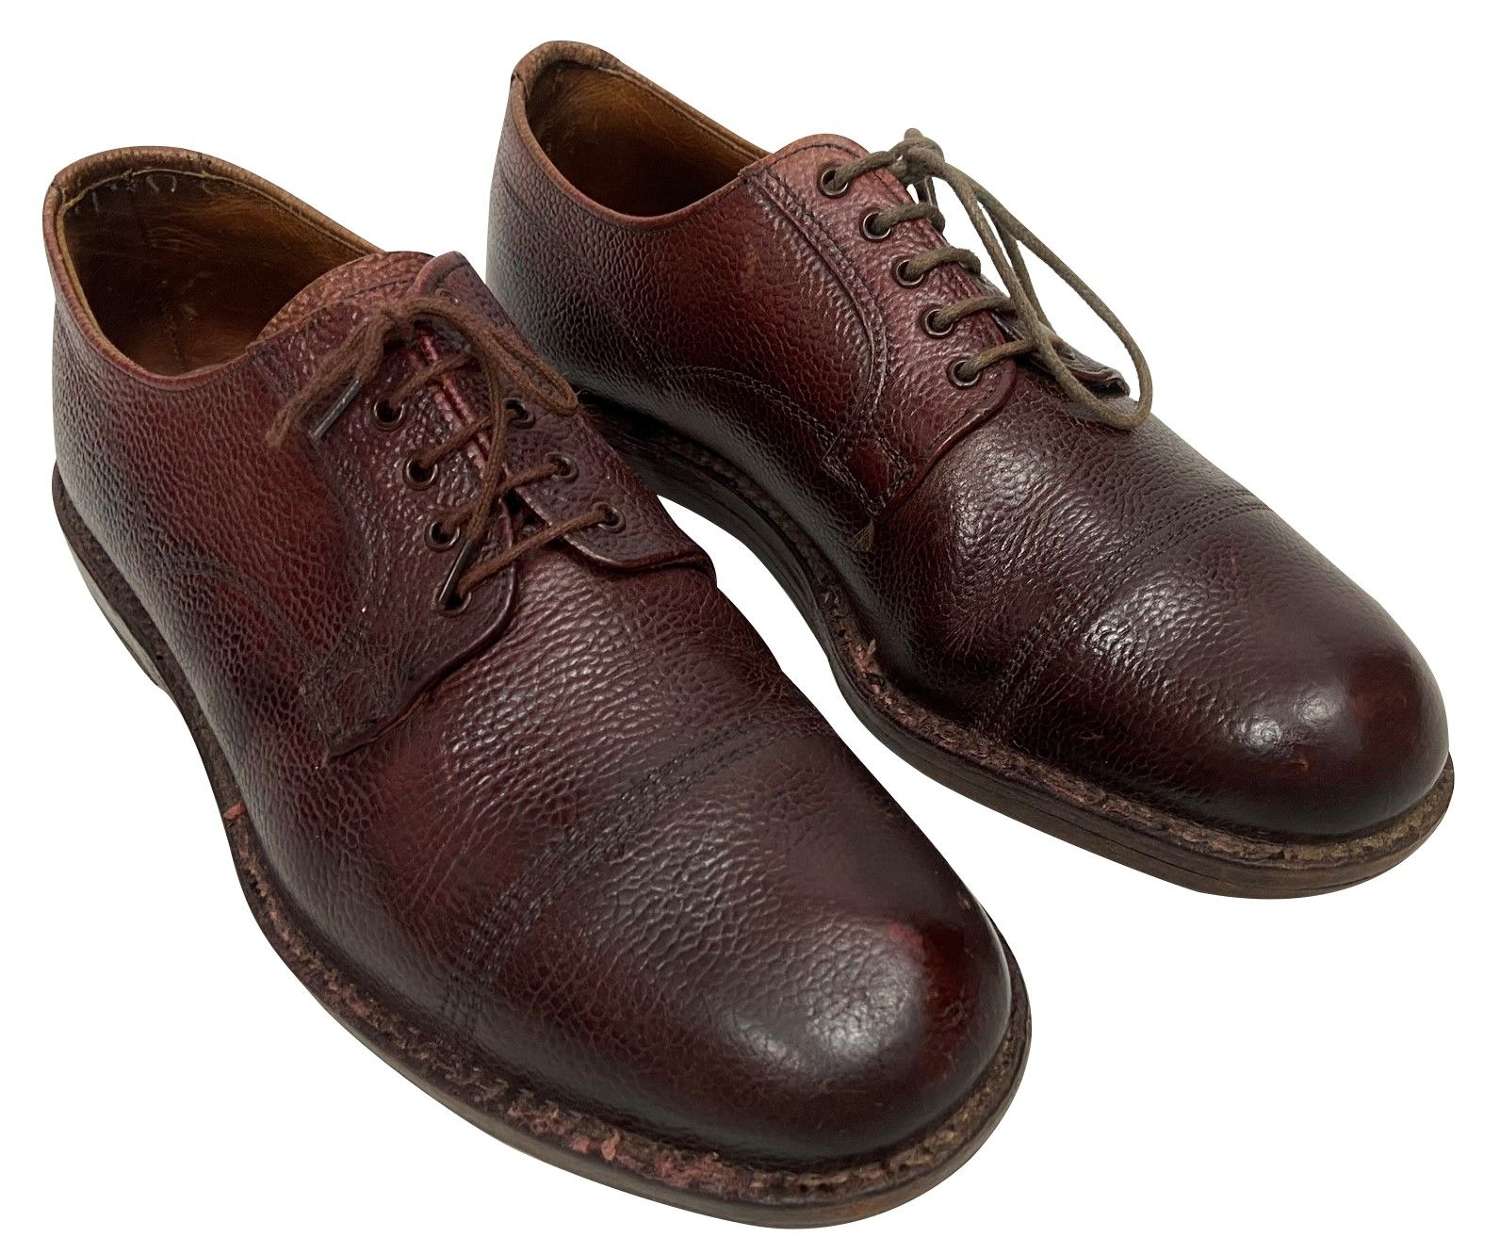 dynamic Performer Social studies Original 1950s Men's Veldtschoen Brown Leather Shoes - Size 8